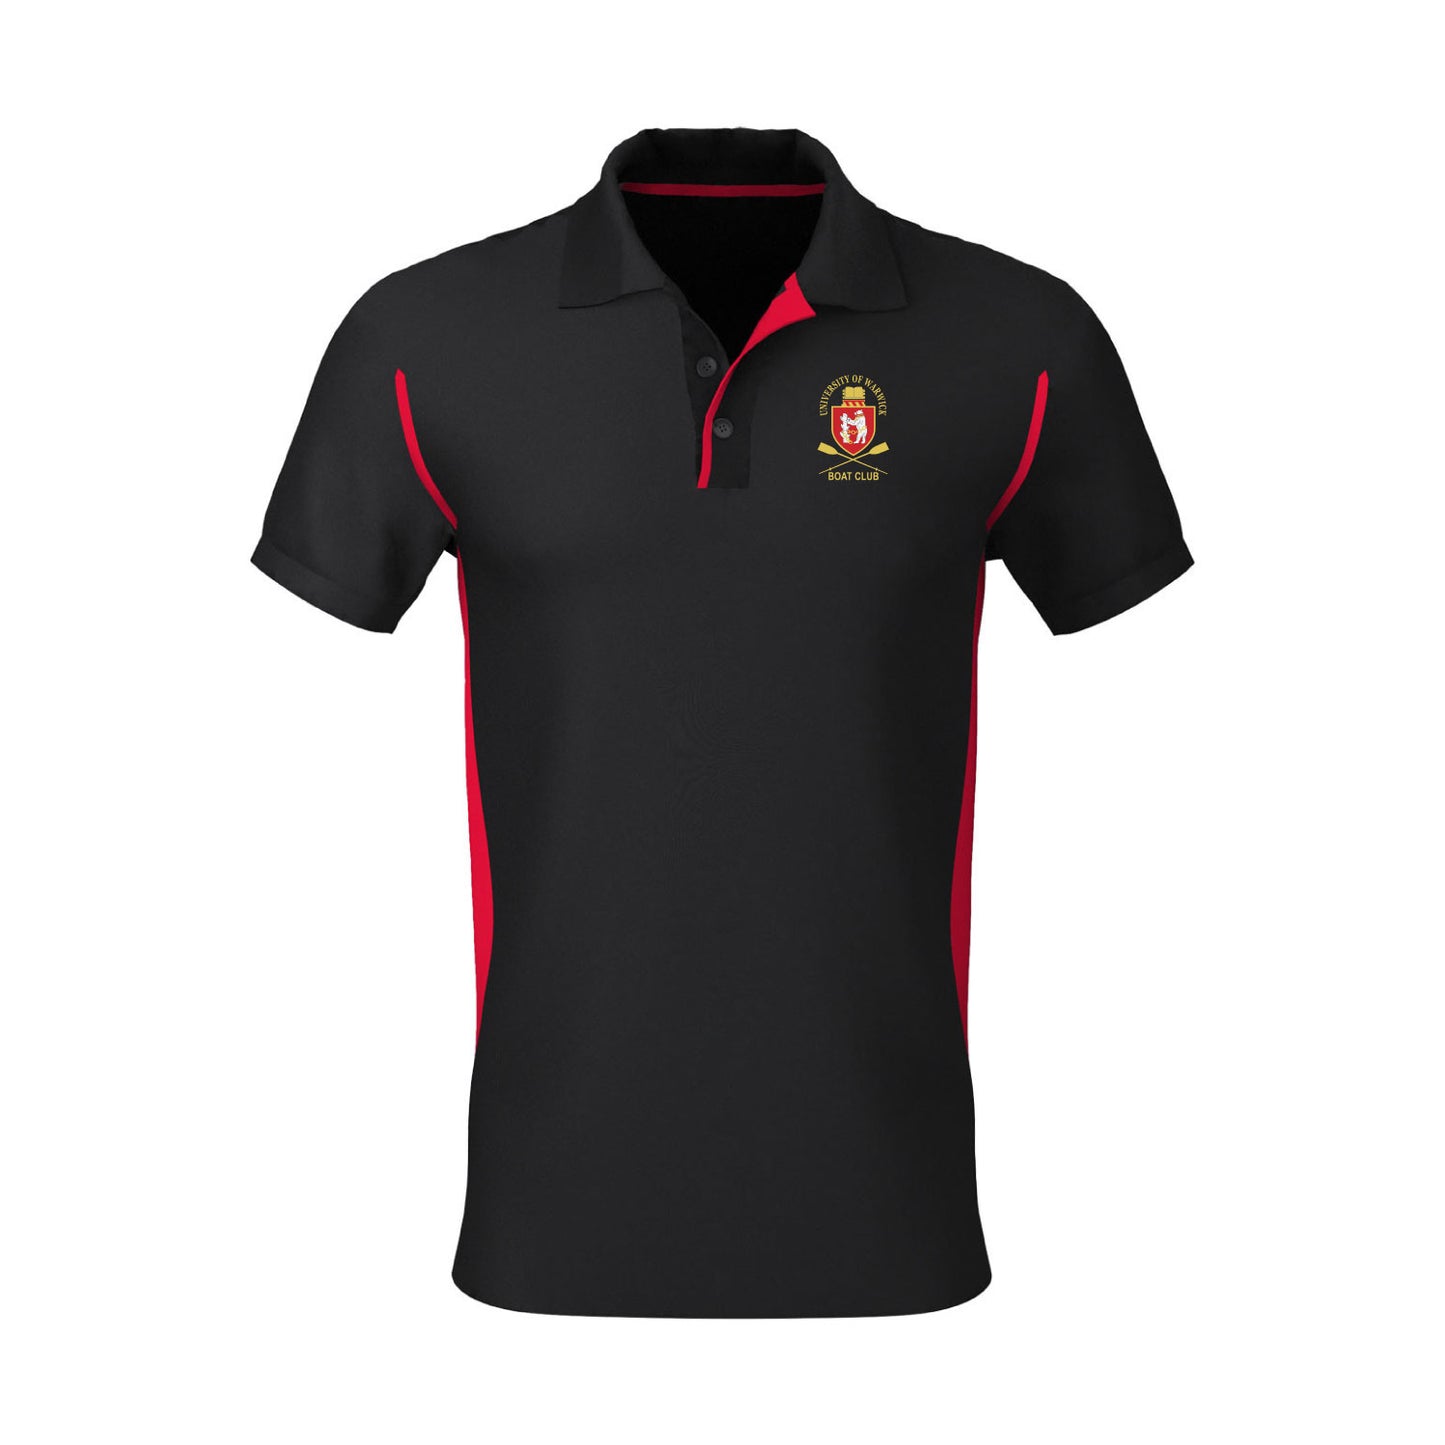 University of Warwick Boat Club Polo Shirt Black & Red